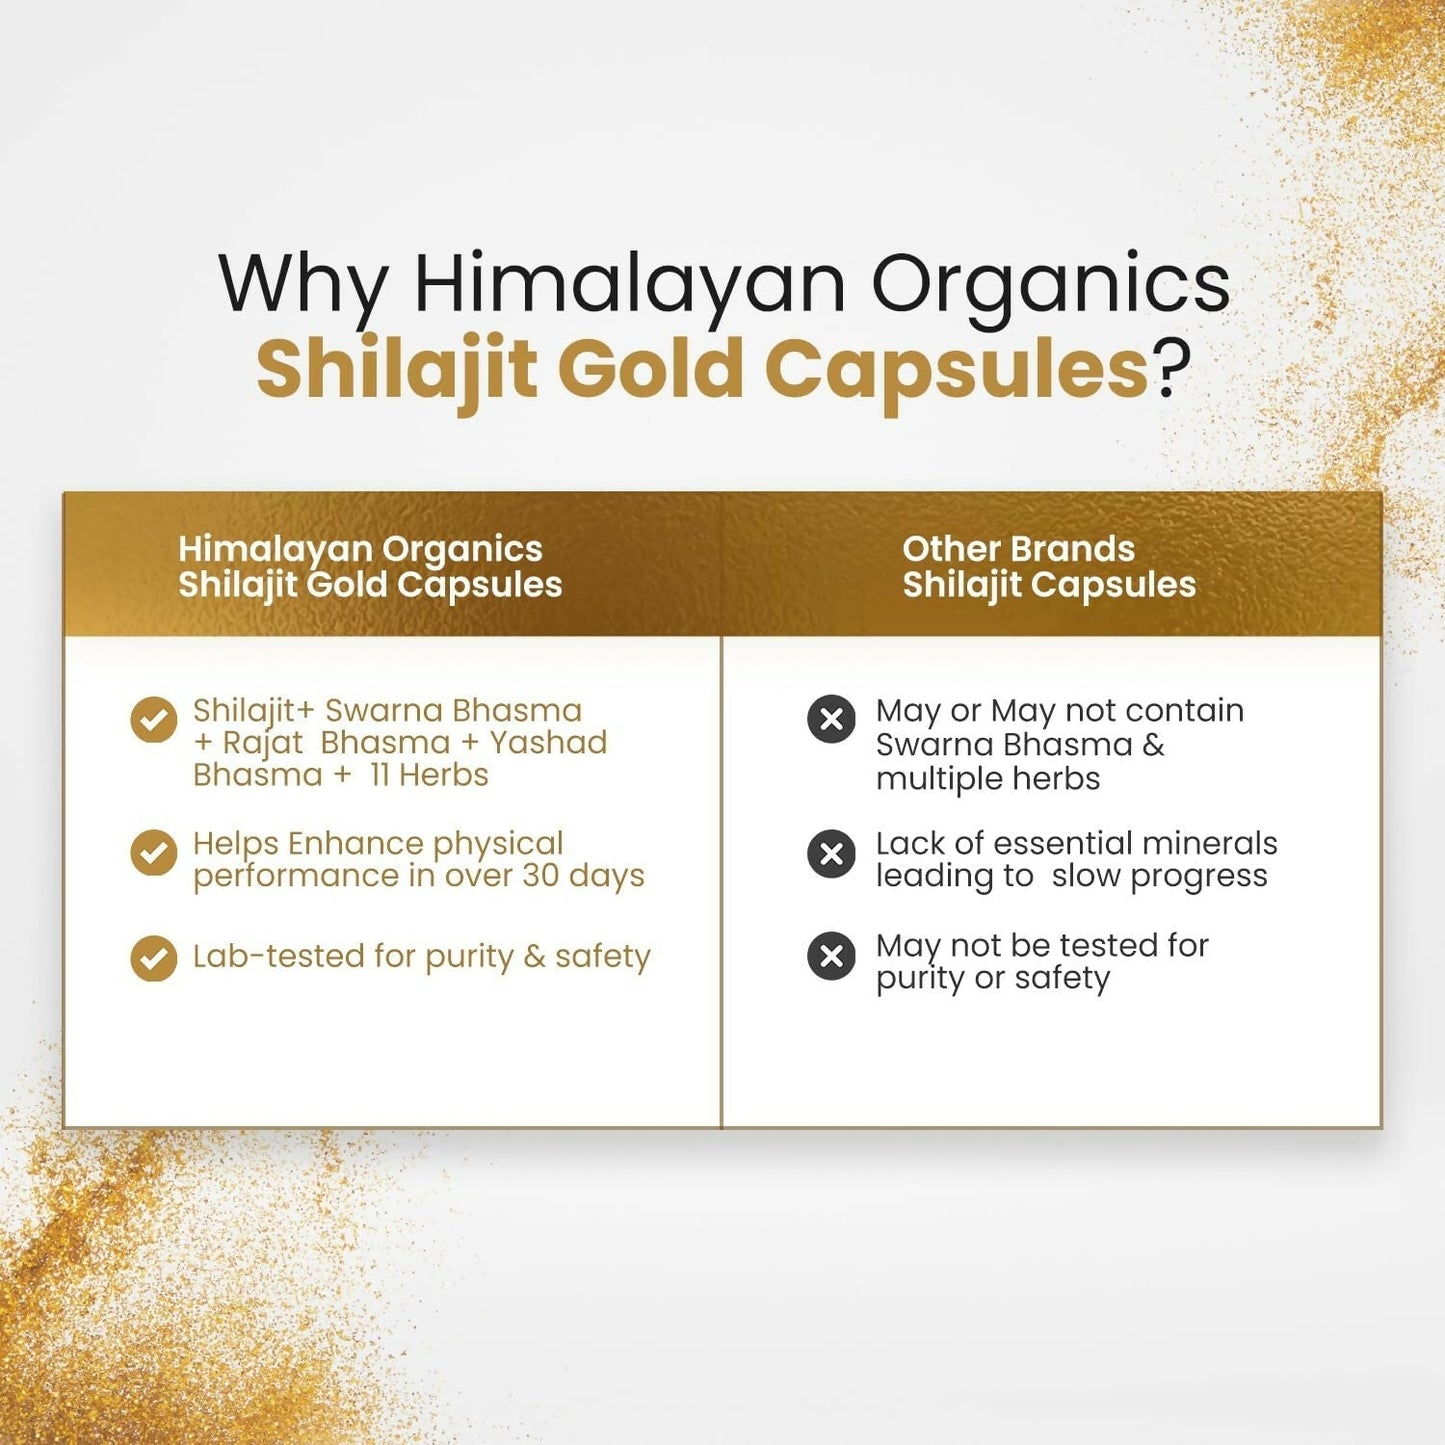 Himalayan Organics Pure SJ Gold Capsules